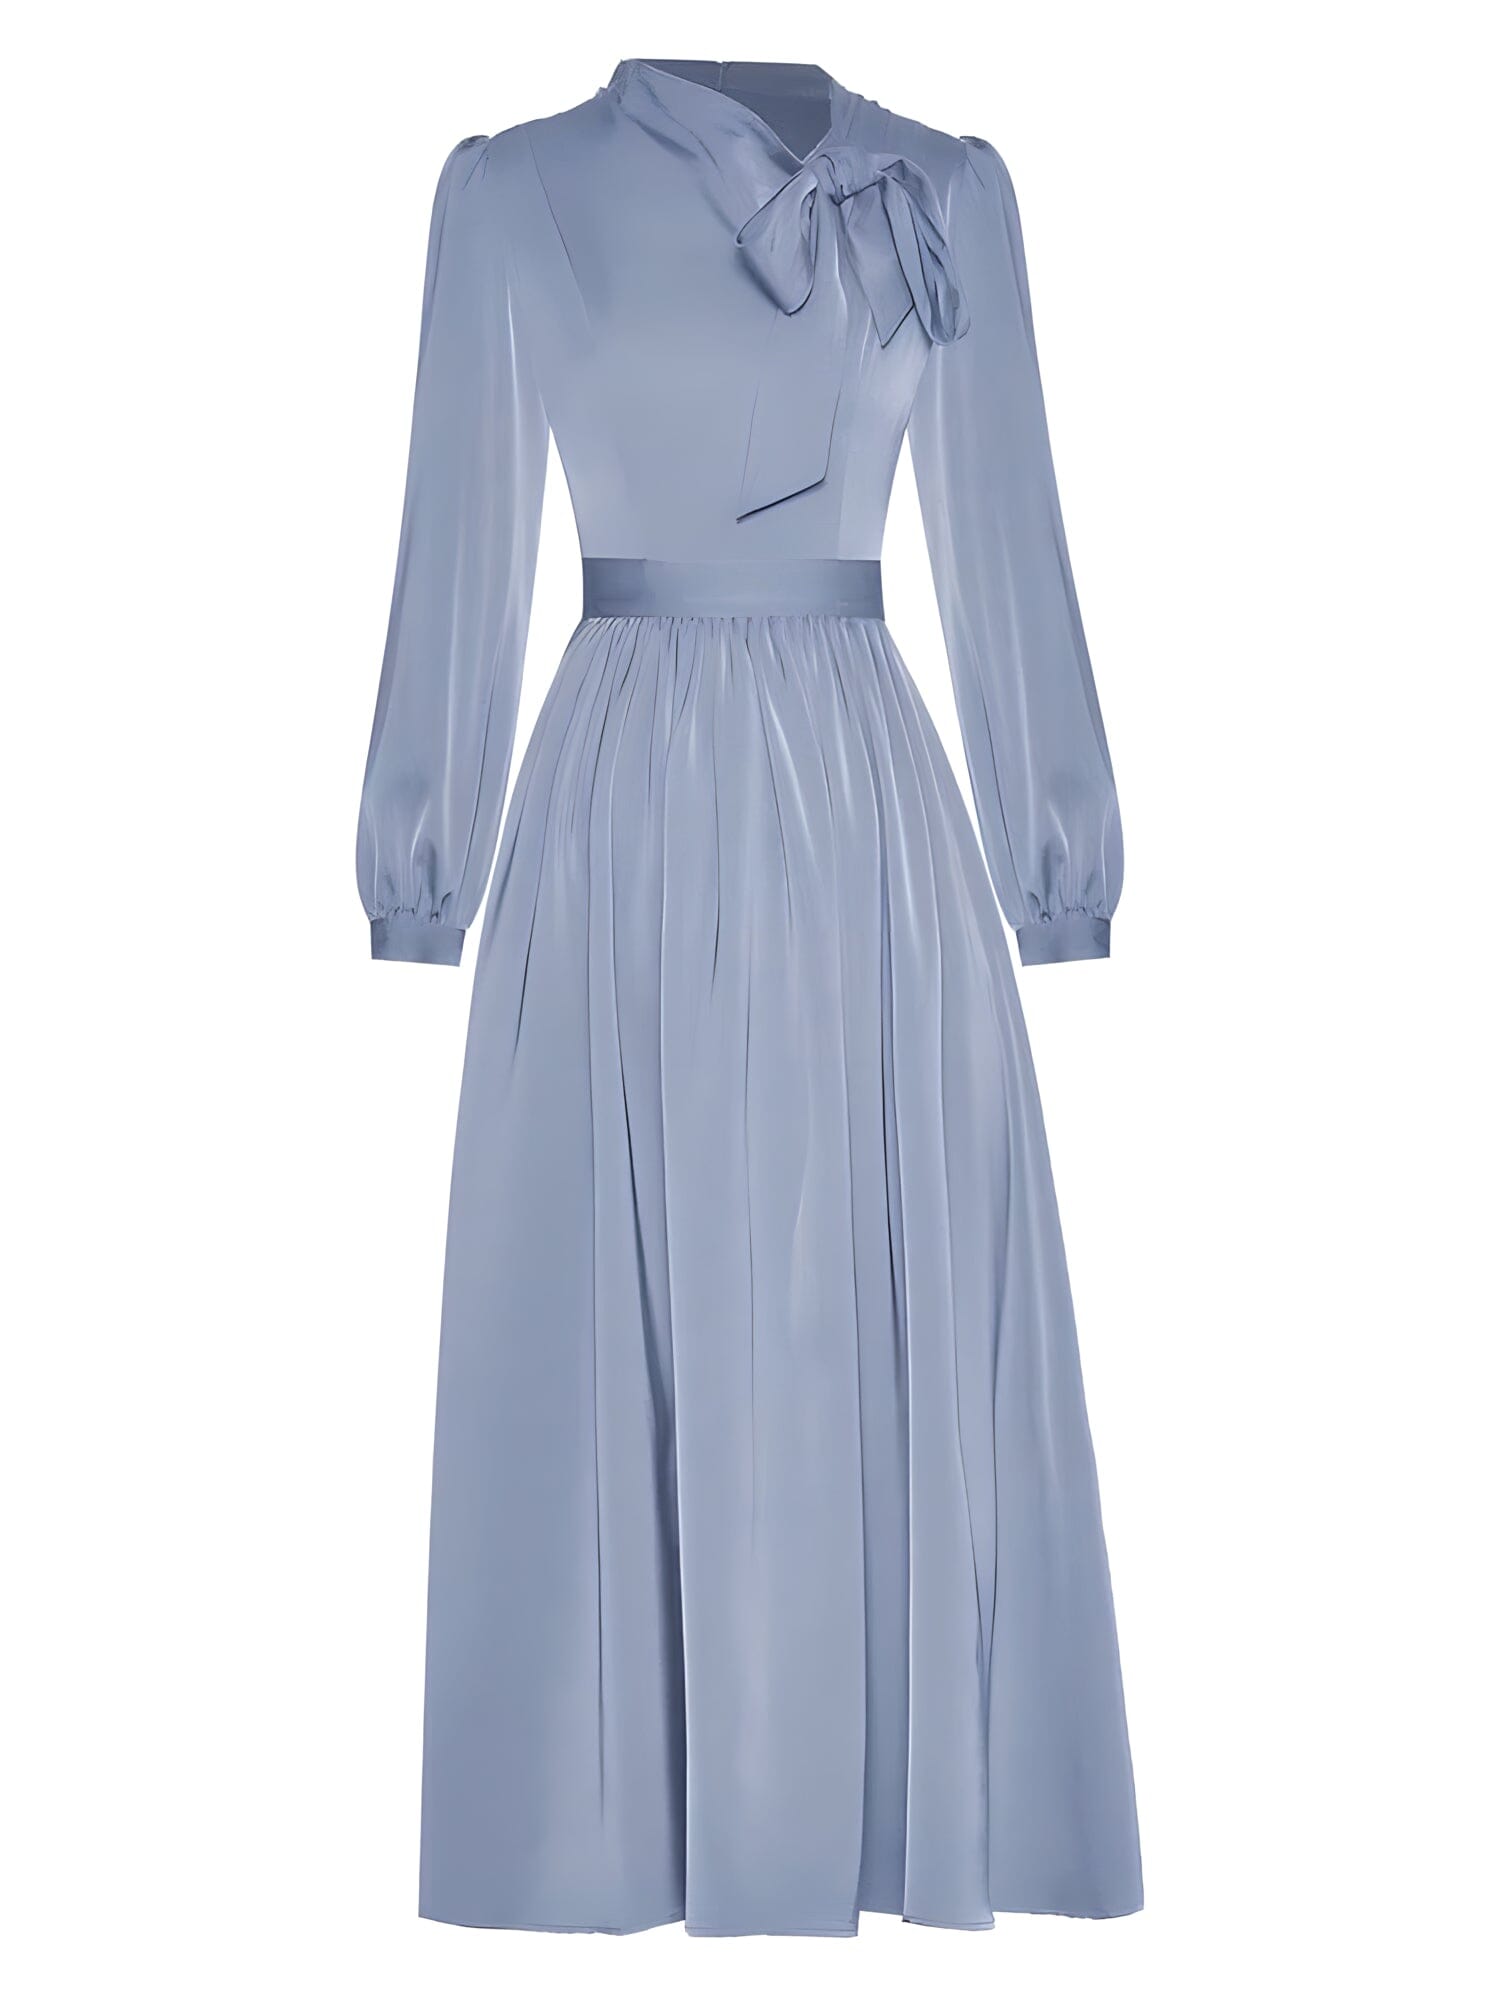 The Mira Long Sleeve Dress - Multiple Colors 0 SA Styles Blue S 